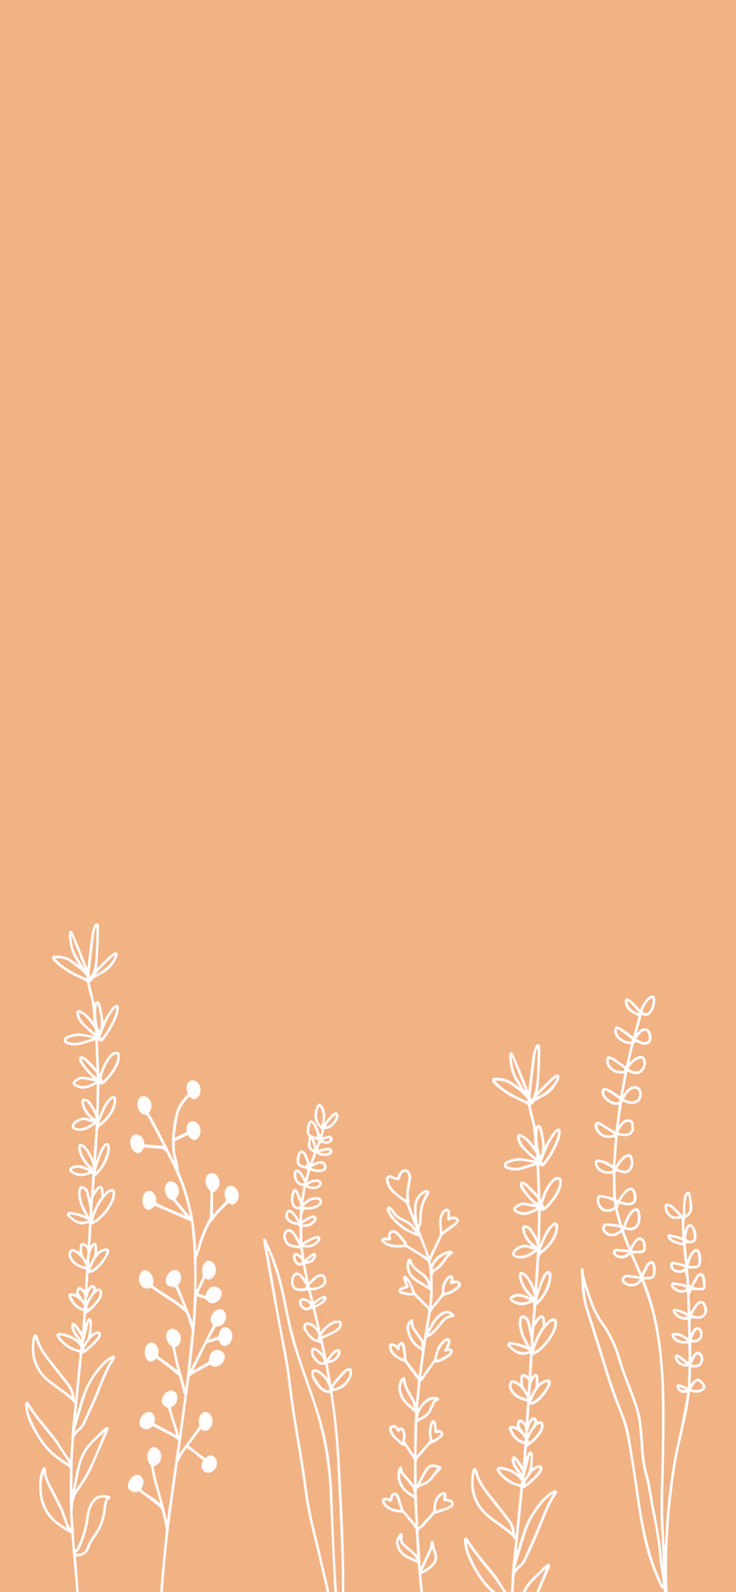 Free Minimal Floral Phone Wallpaper #free #wallpaper #iphone #floral #lineart #wild. Floral wallpaper iphone, iPhone background wallpaper, Simple iphone wallpaper